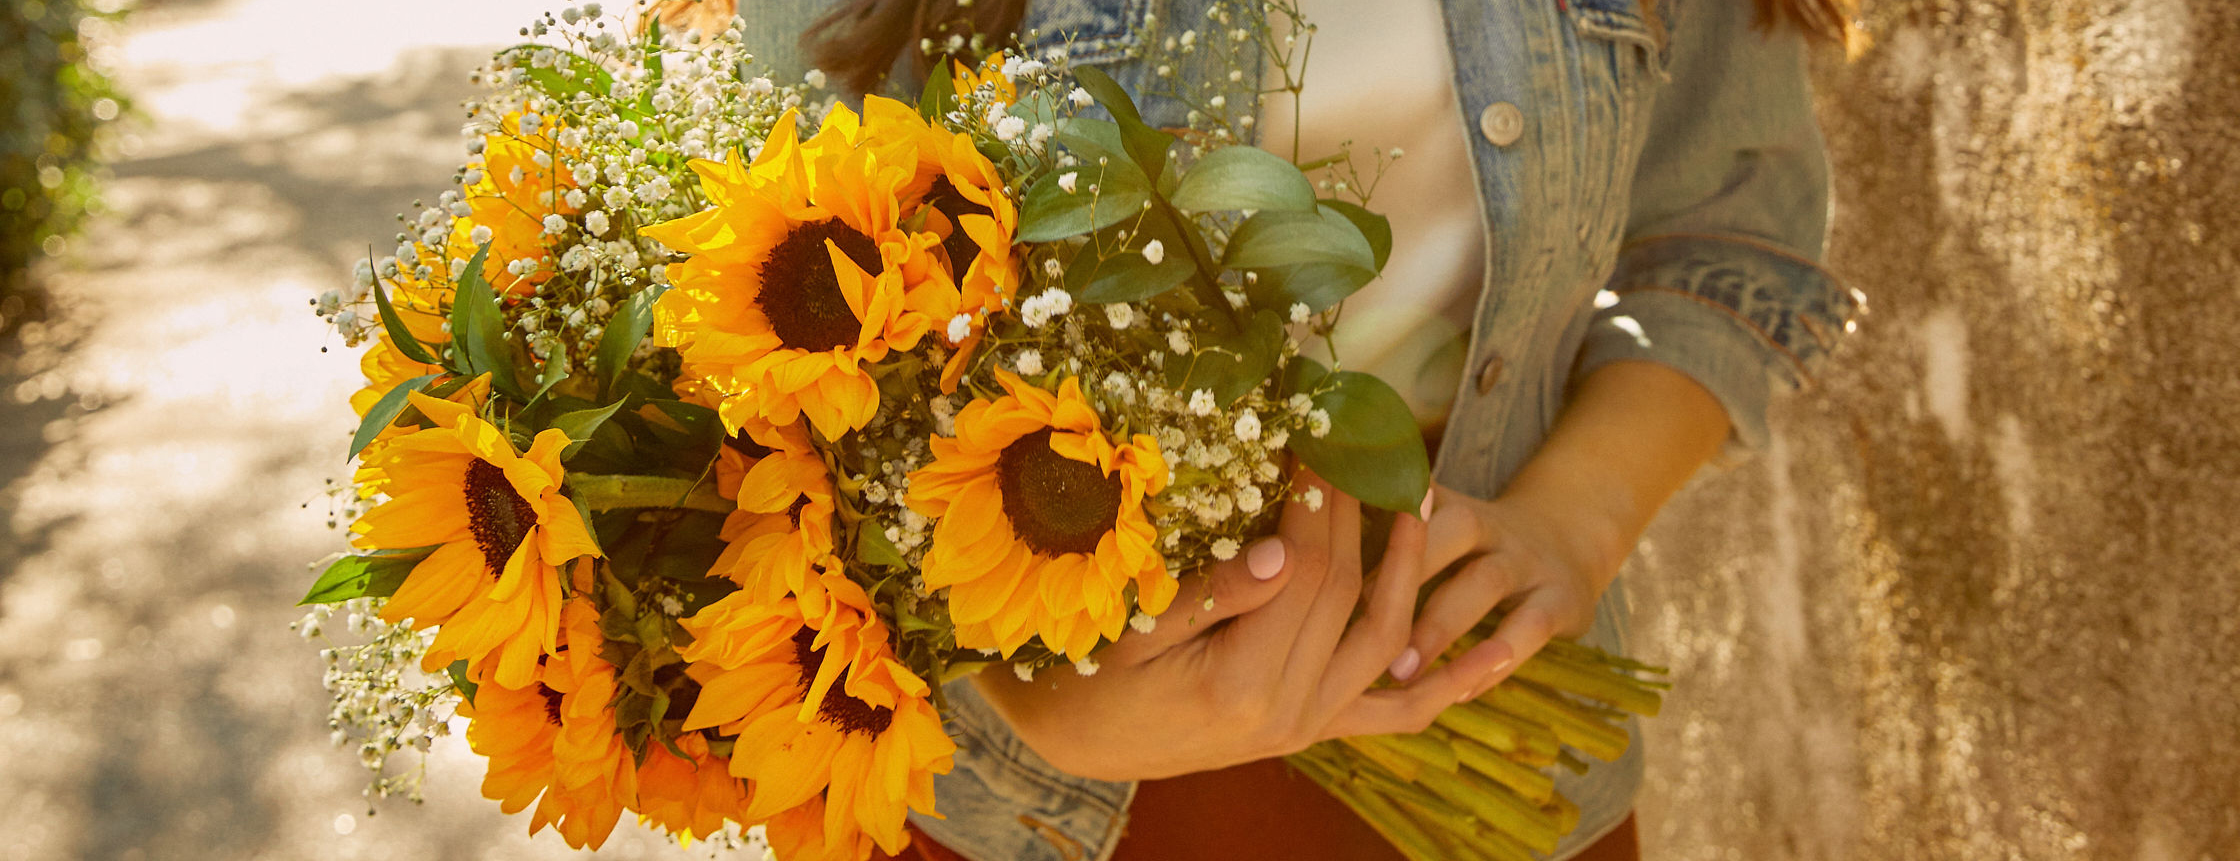 Woman holding sunflower bouquet at golden hour